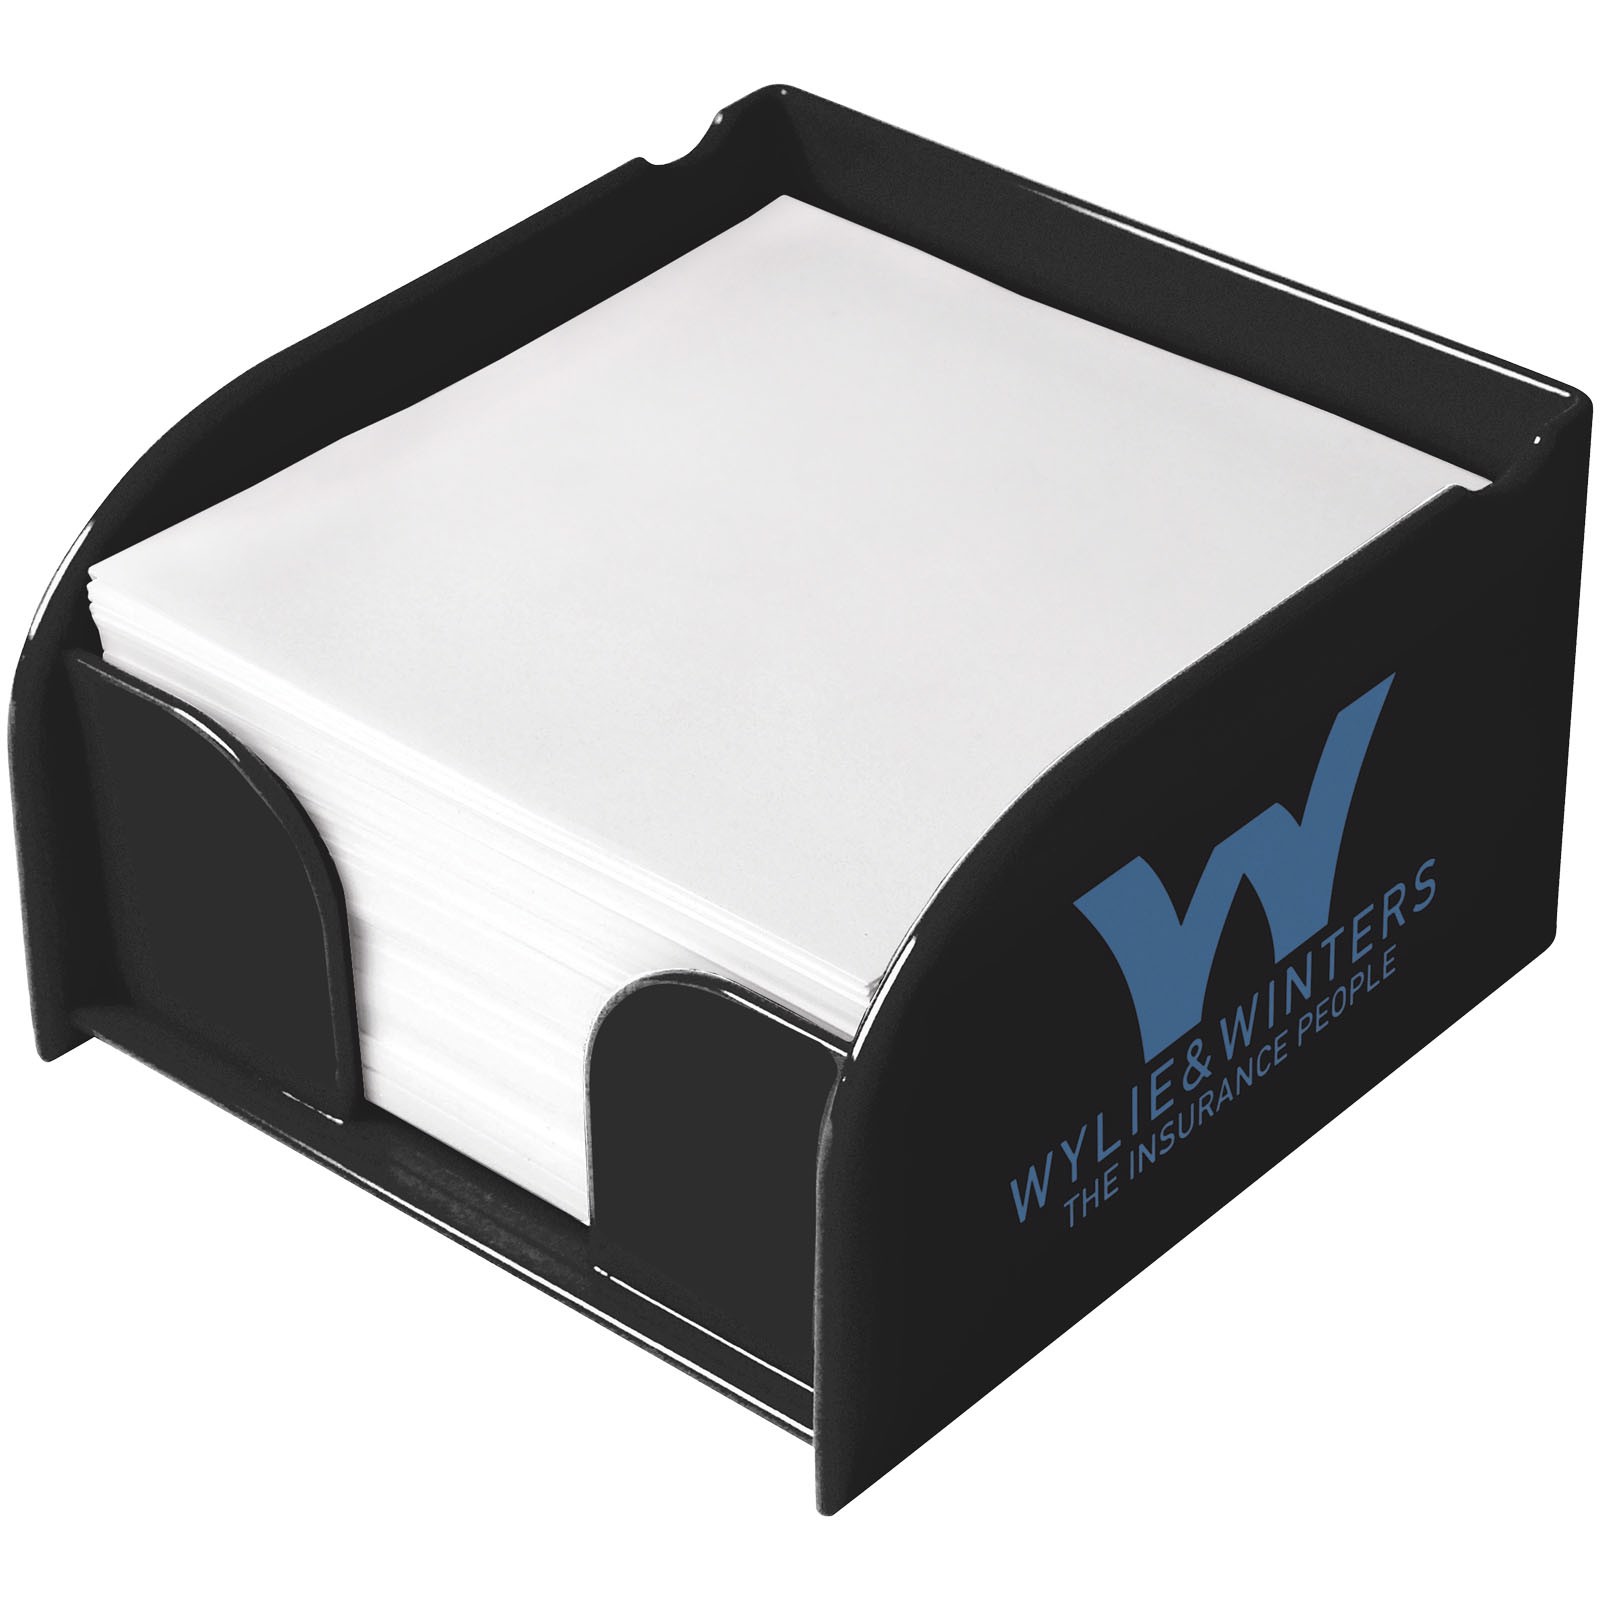 Vessel medium memo block and holder - Solid Black